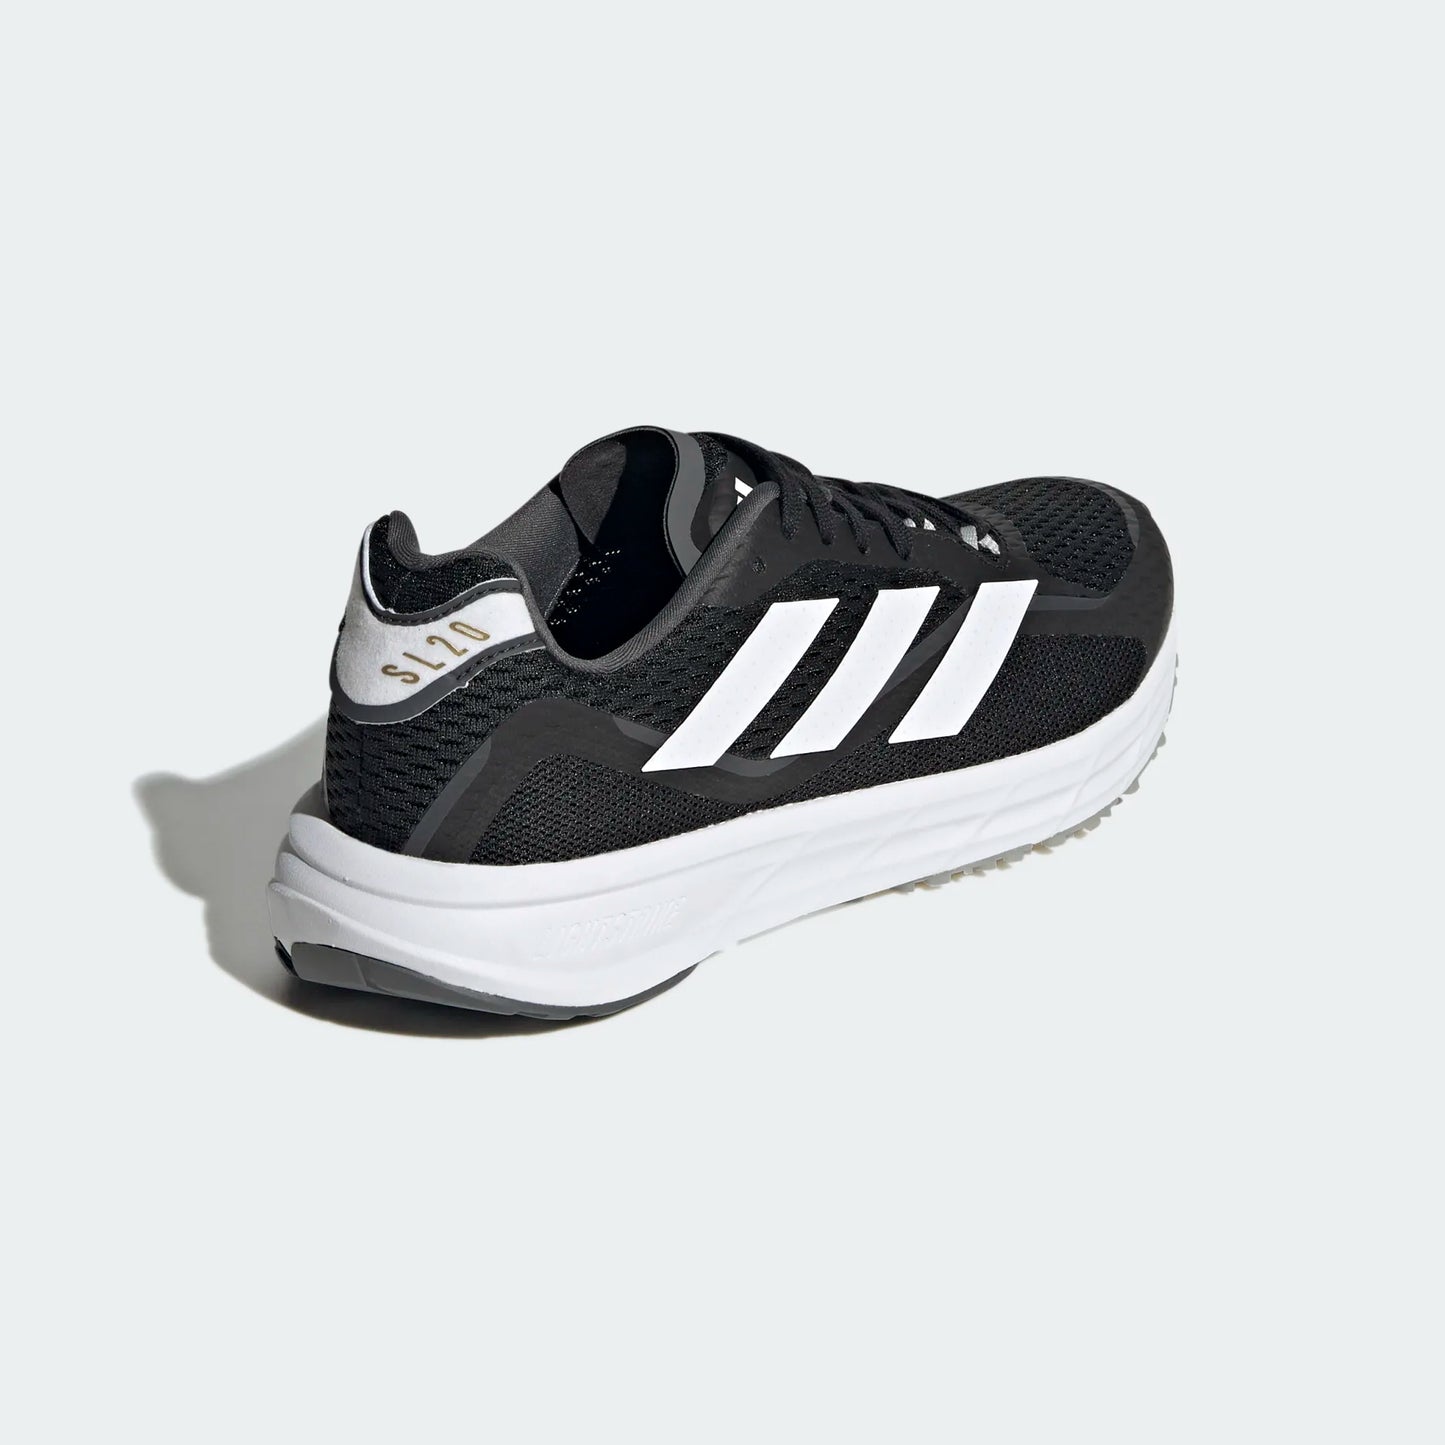 Adidas Women's Sl20.3 Running Shoe